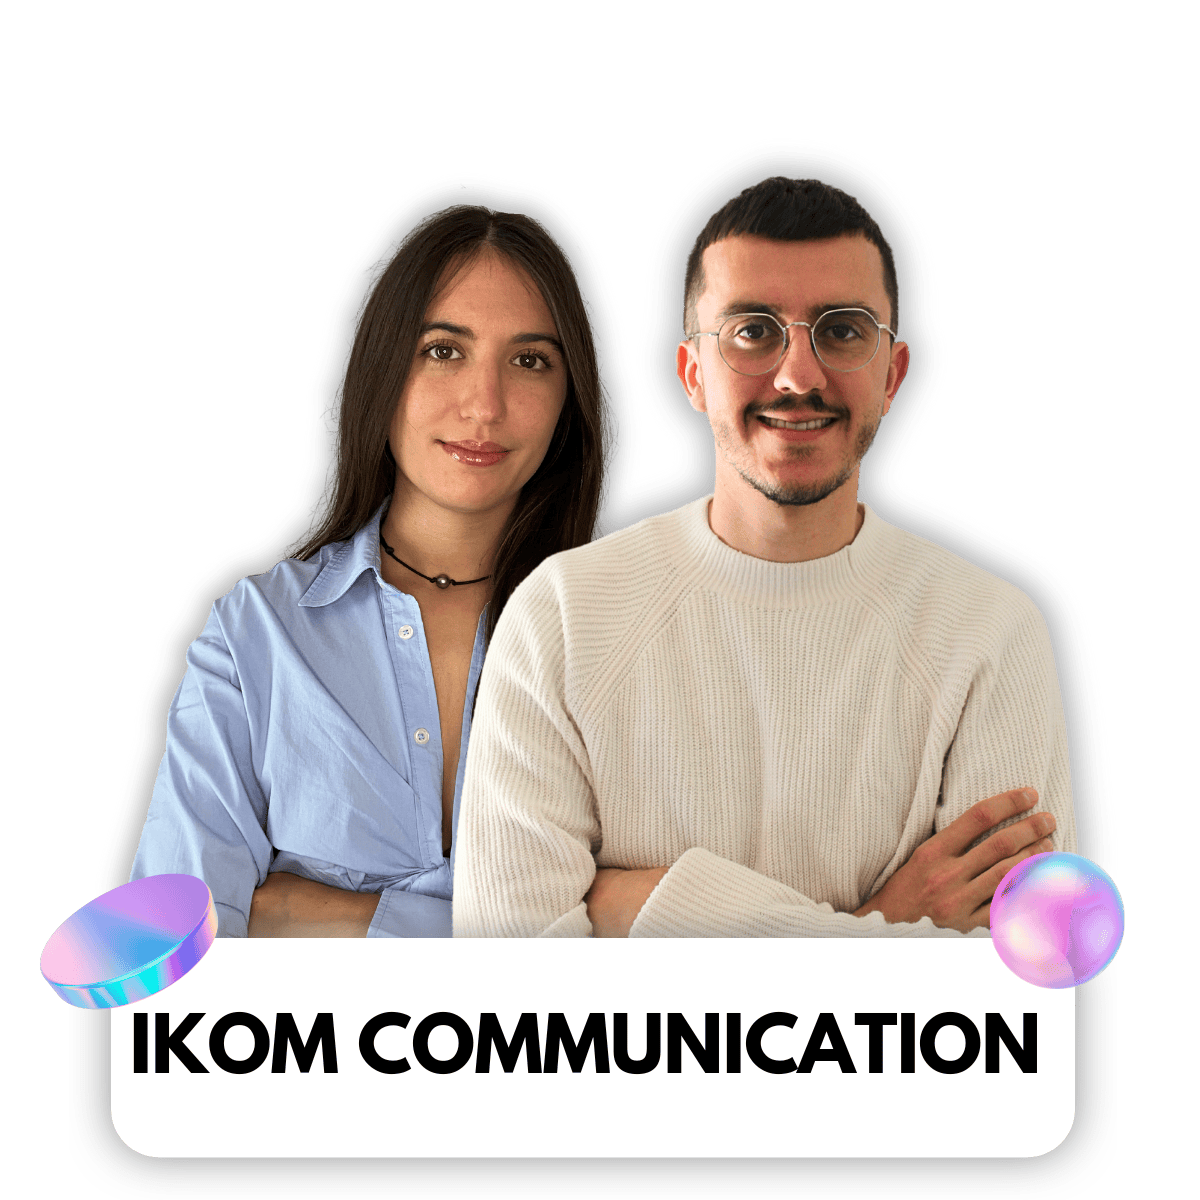 Difference entre les agence de communication traditionnel et les agences de communication comme Ikom 